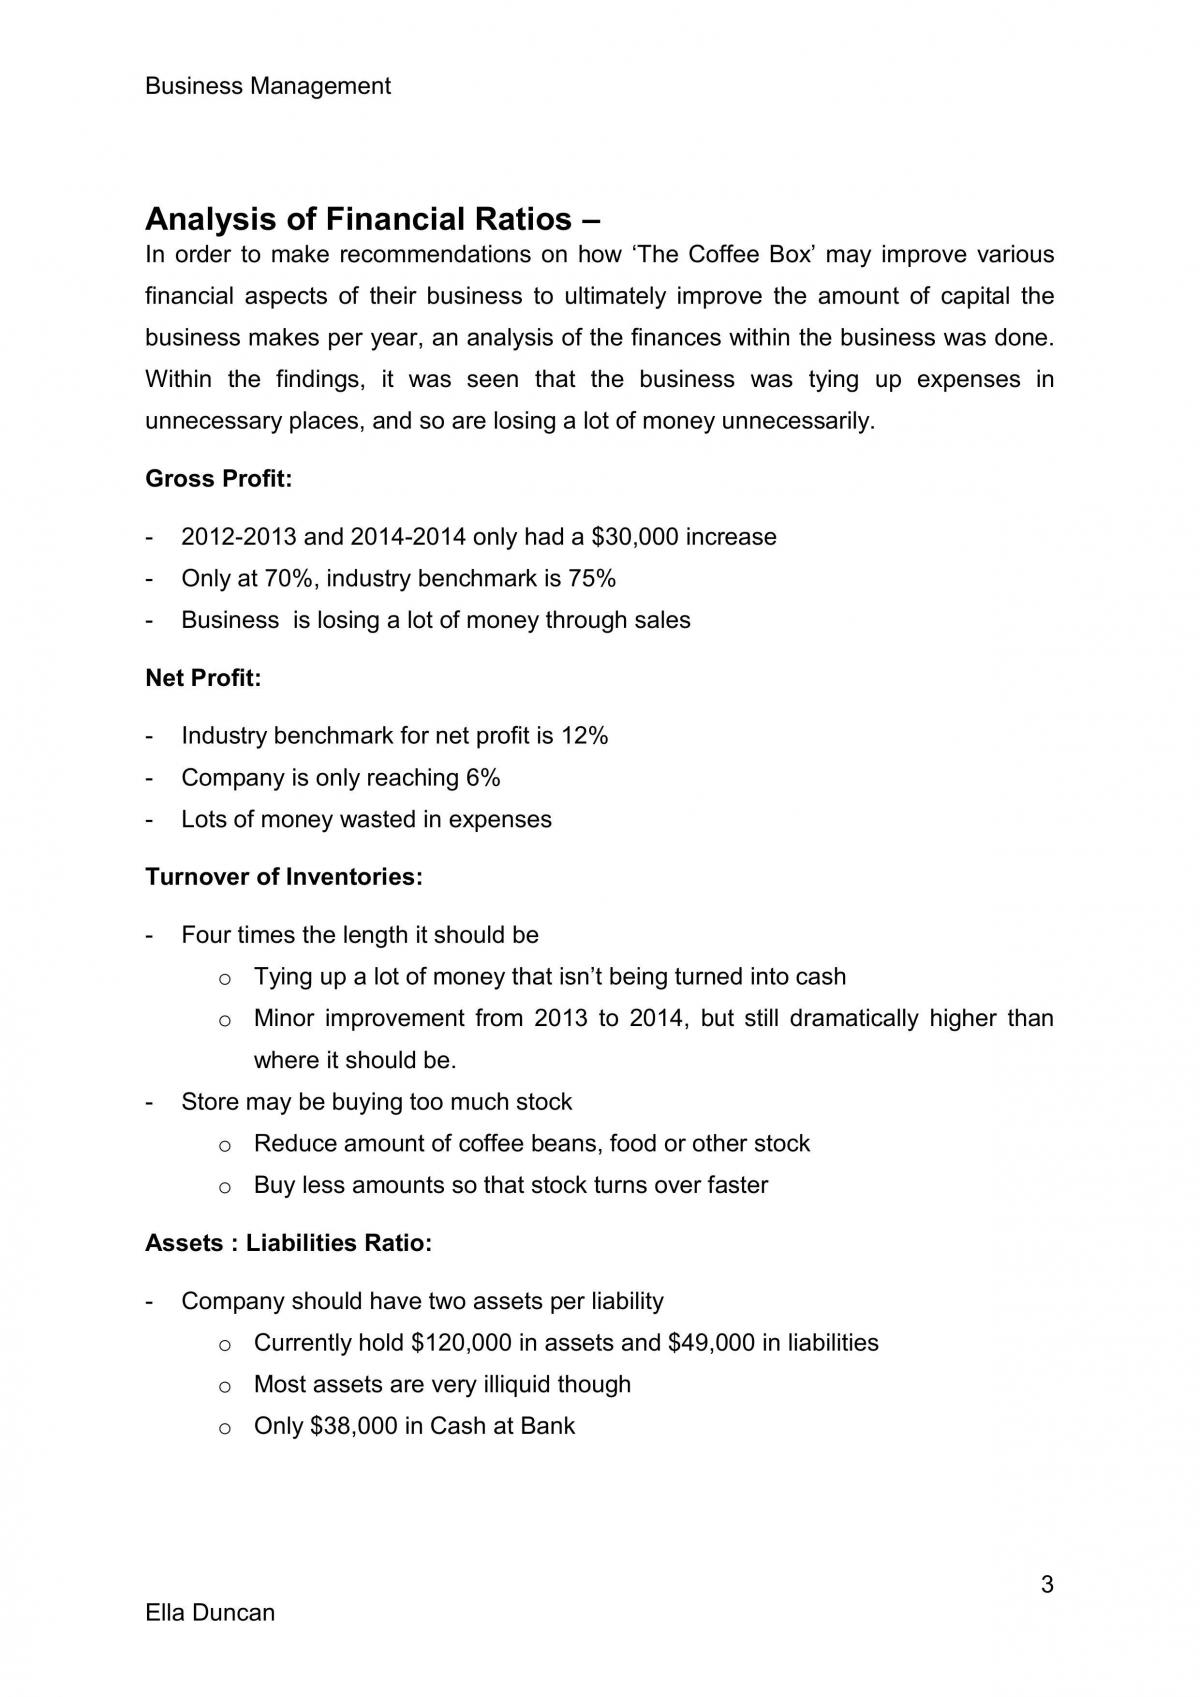 financial management essay pdf